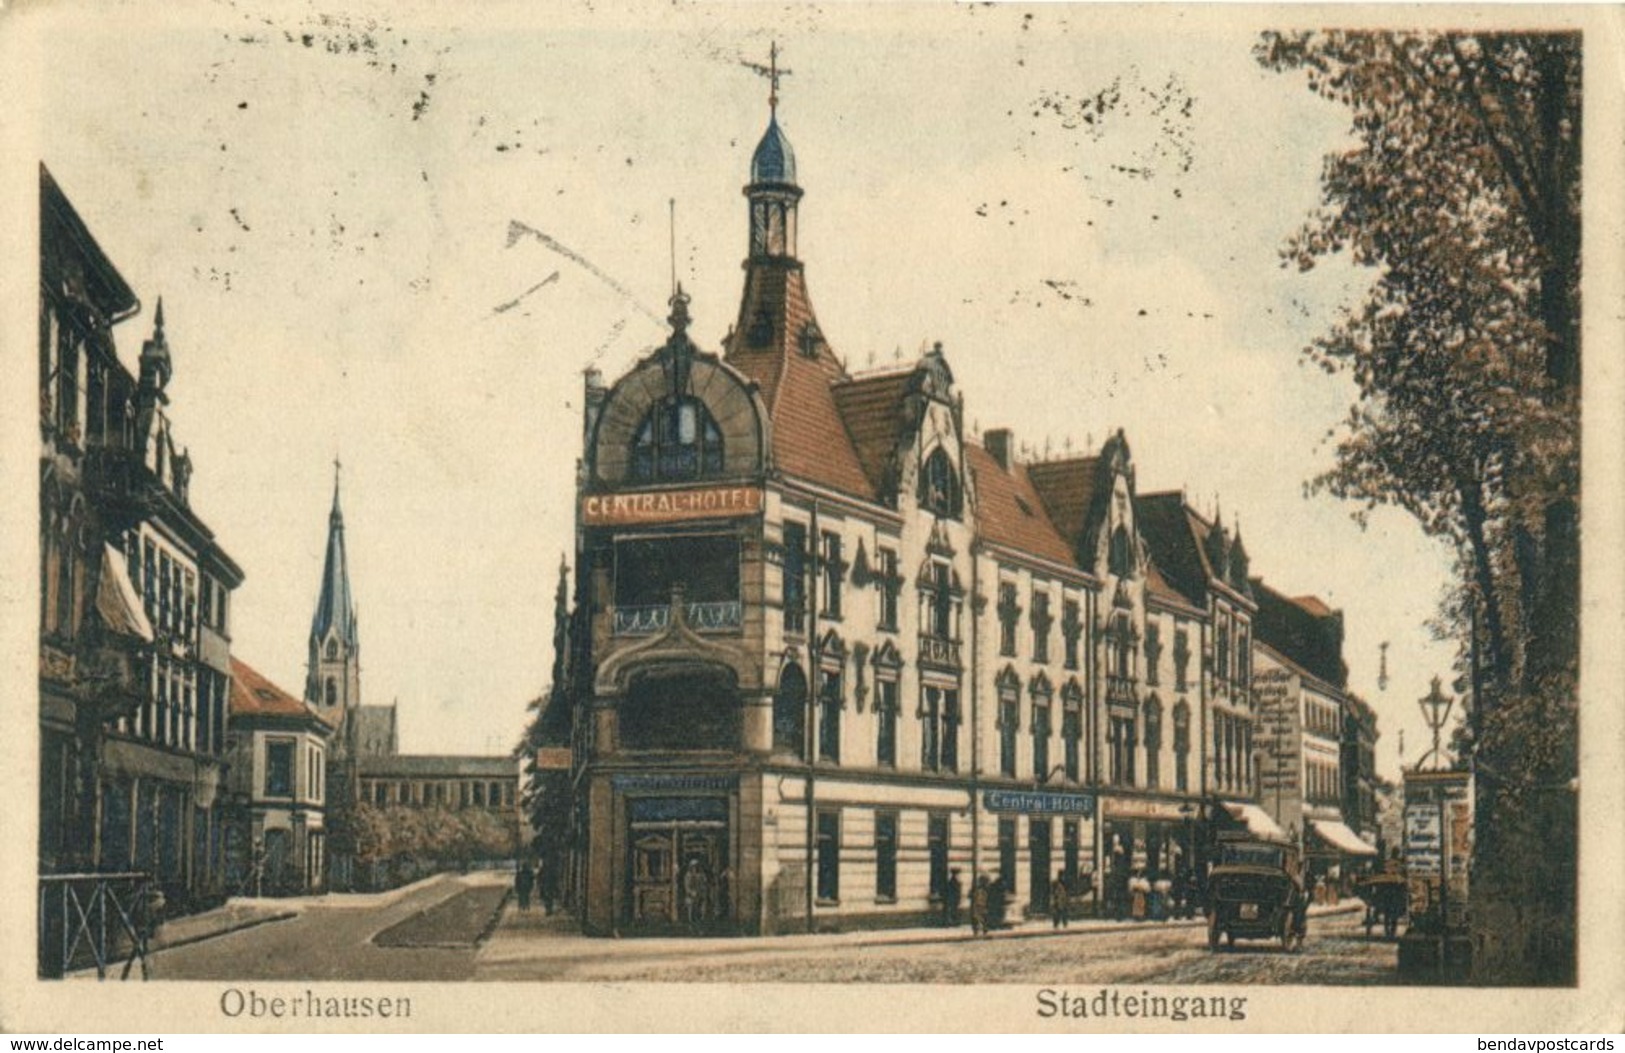 OBERHAUSEN, Stadteingang, Central-Hotel (1922) AK - Oberhausen